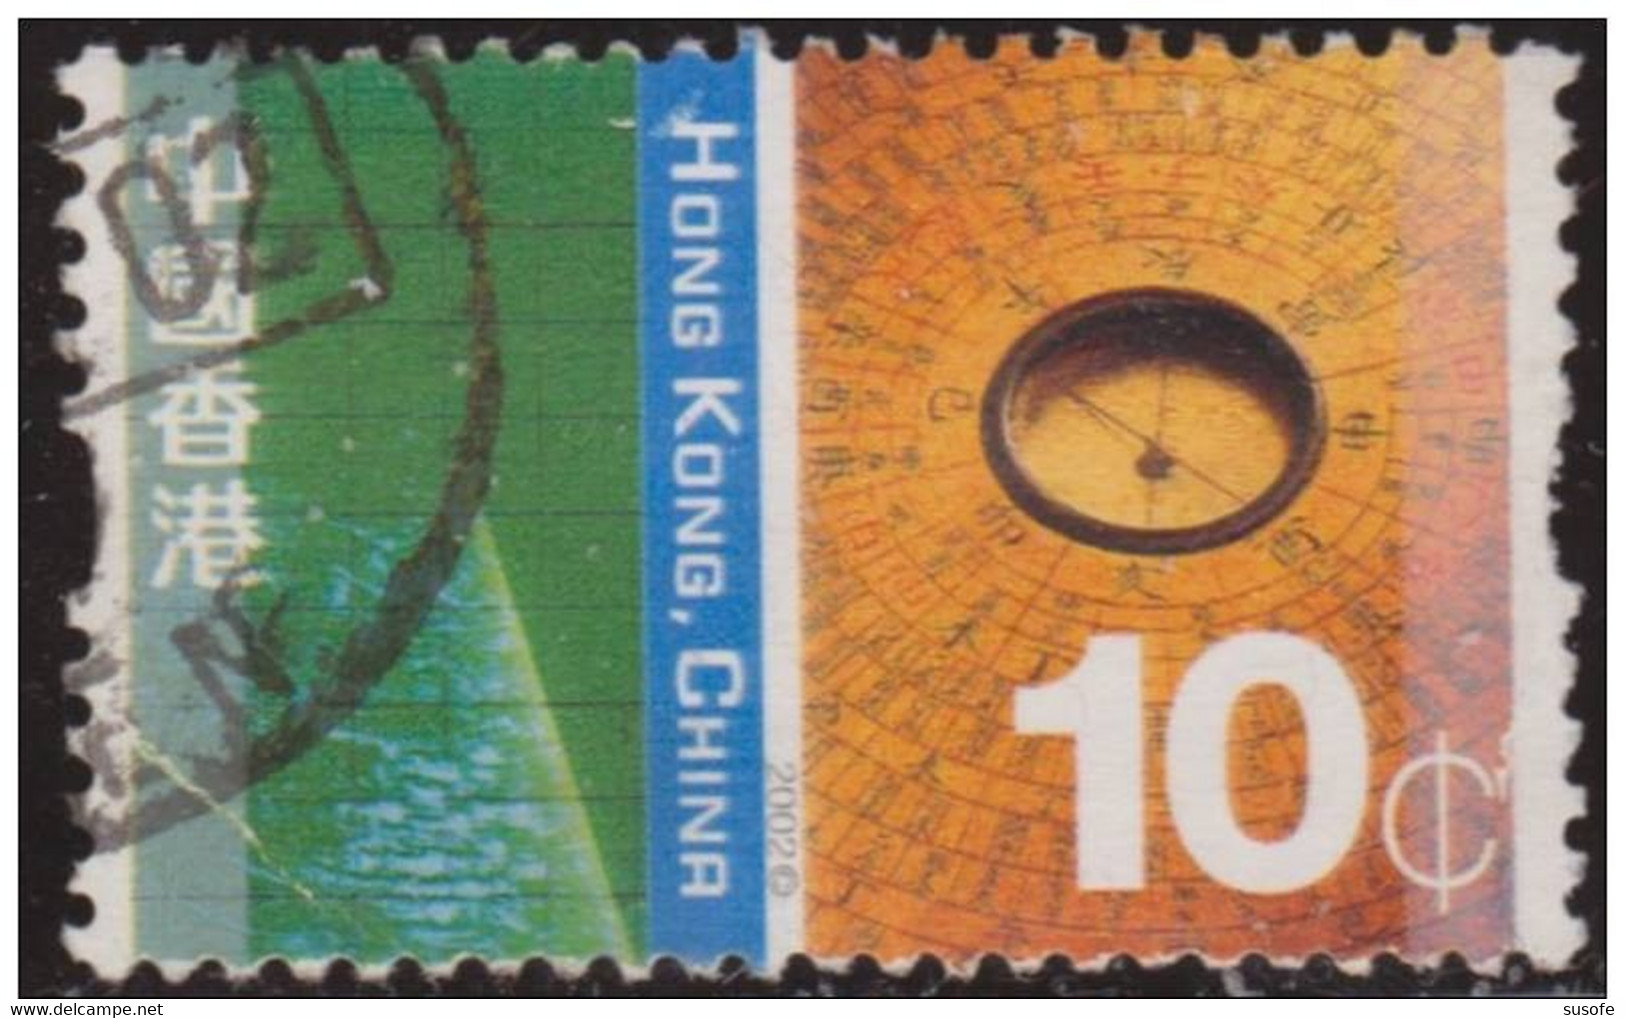 Hong Kong China 2002 Scott 998 Sello º Cultural Diversity Navegacion Michel 1055 Yvert 1027 Stamps Timbre Briefmarke - Used Stamps